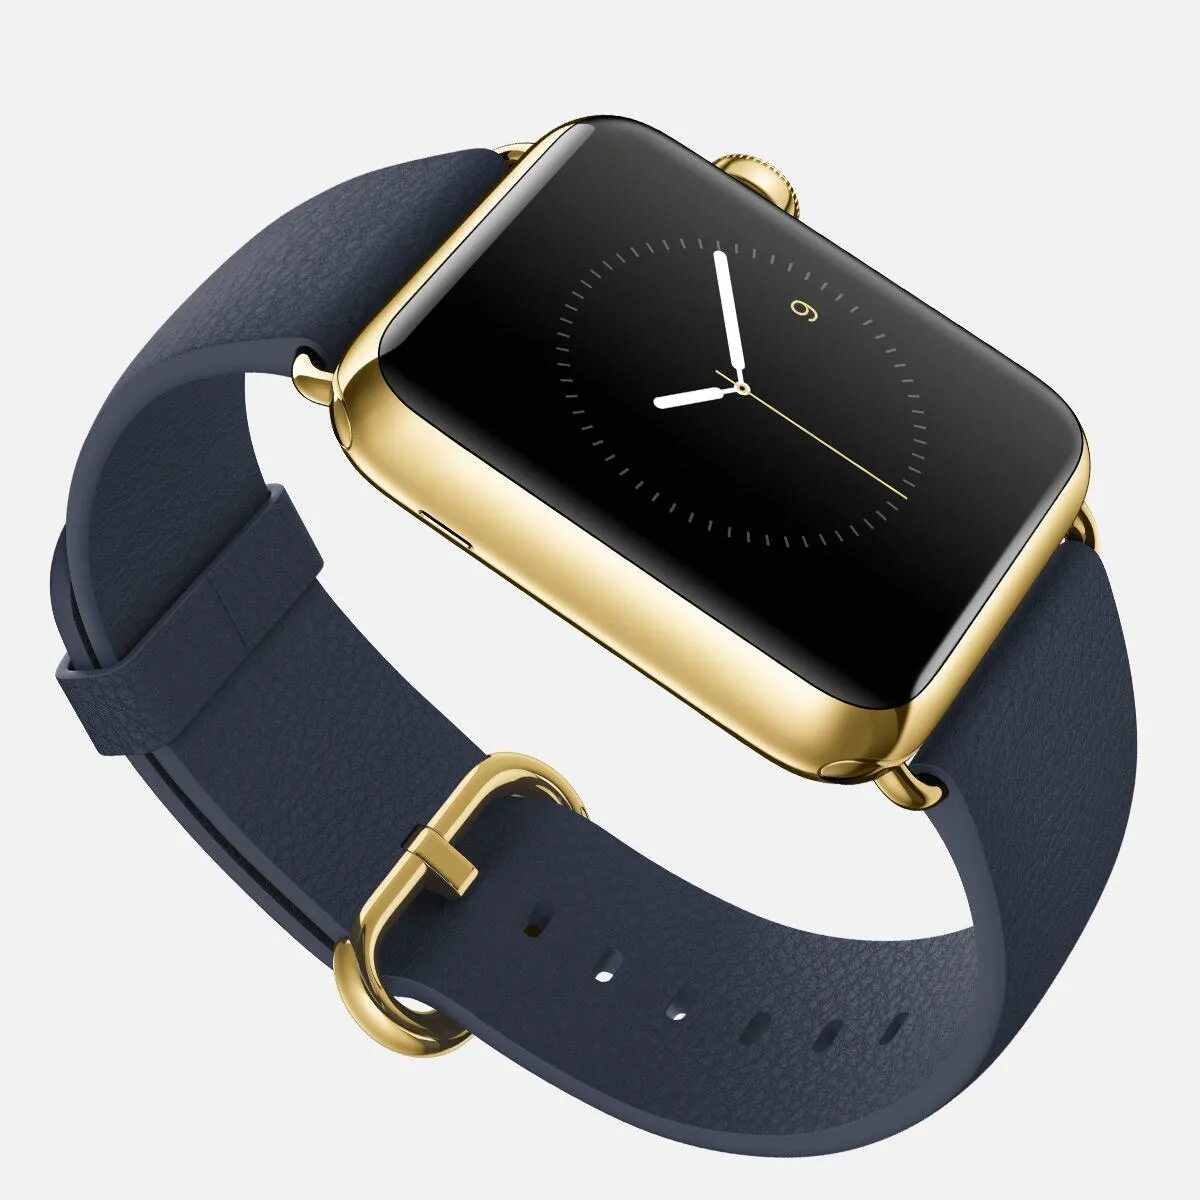 Apple watch edition. Apple watch Gold. Часы эпл вотч классические. Золотые смарт часы Apple watch.